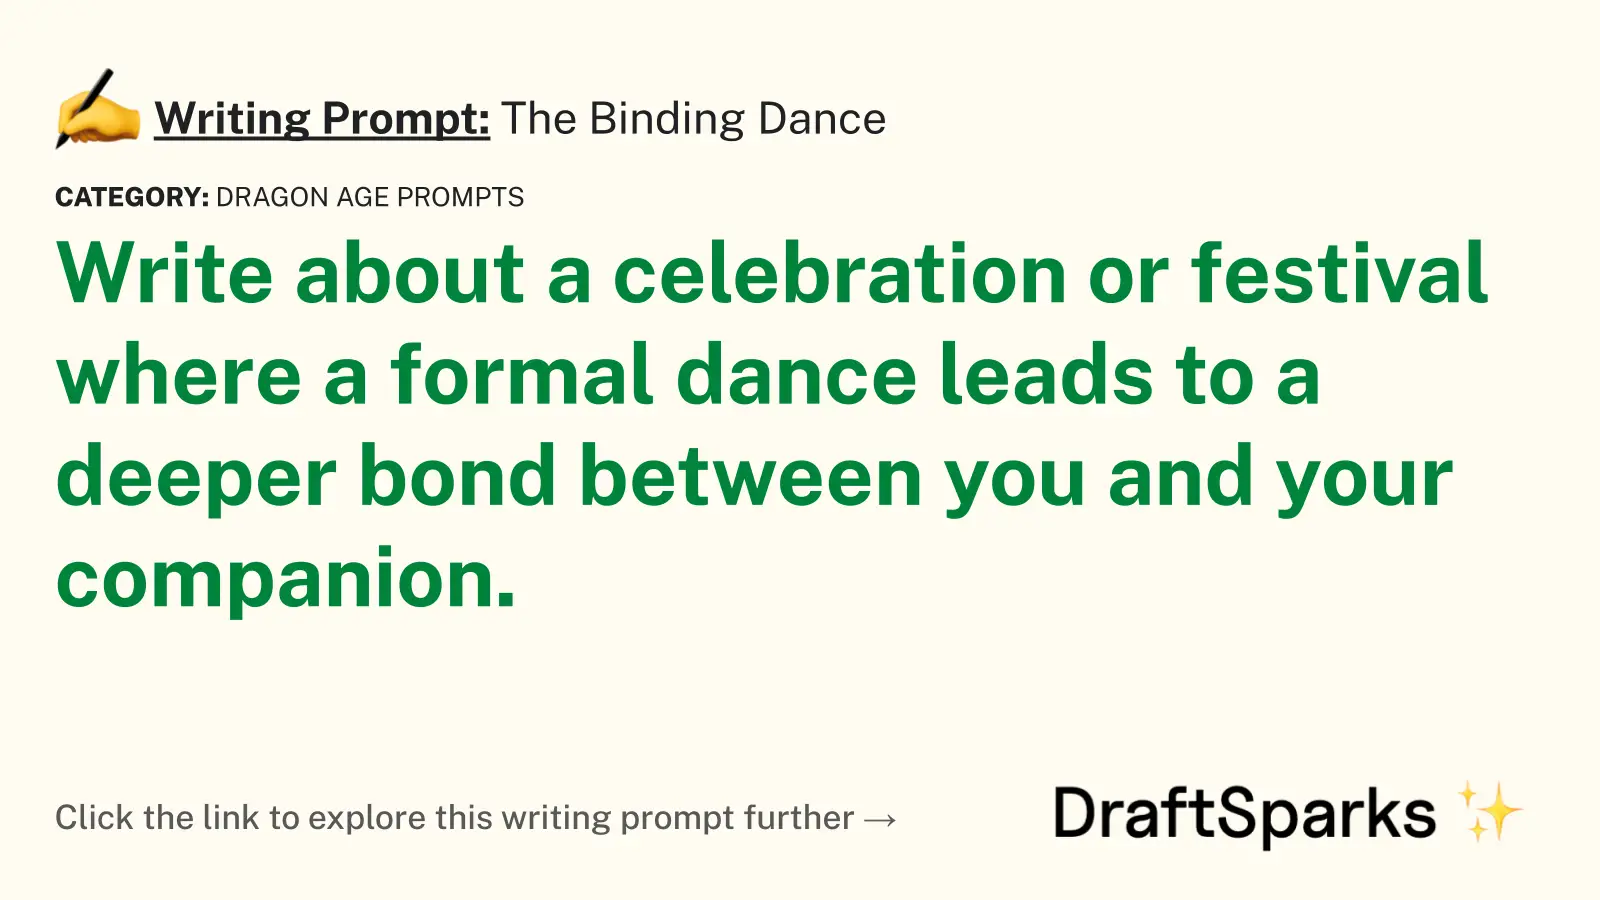 The Binding Dance